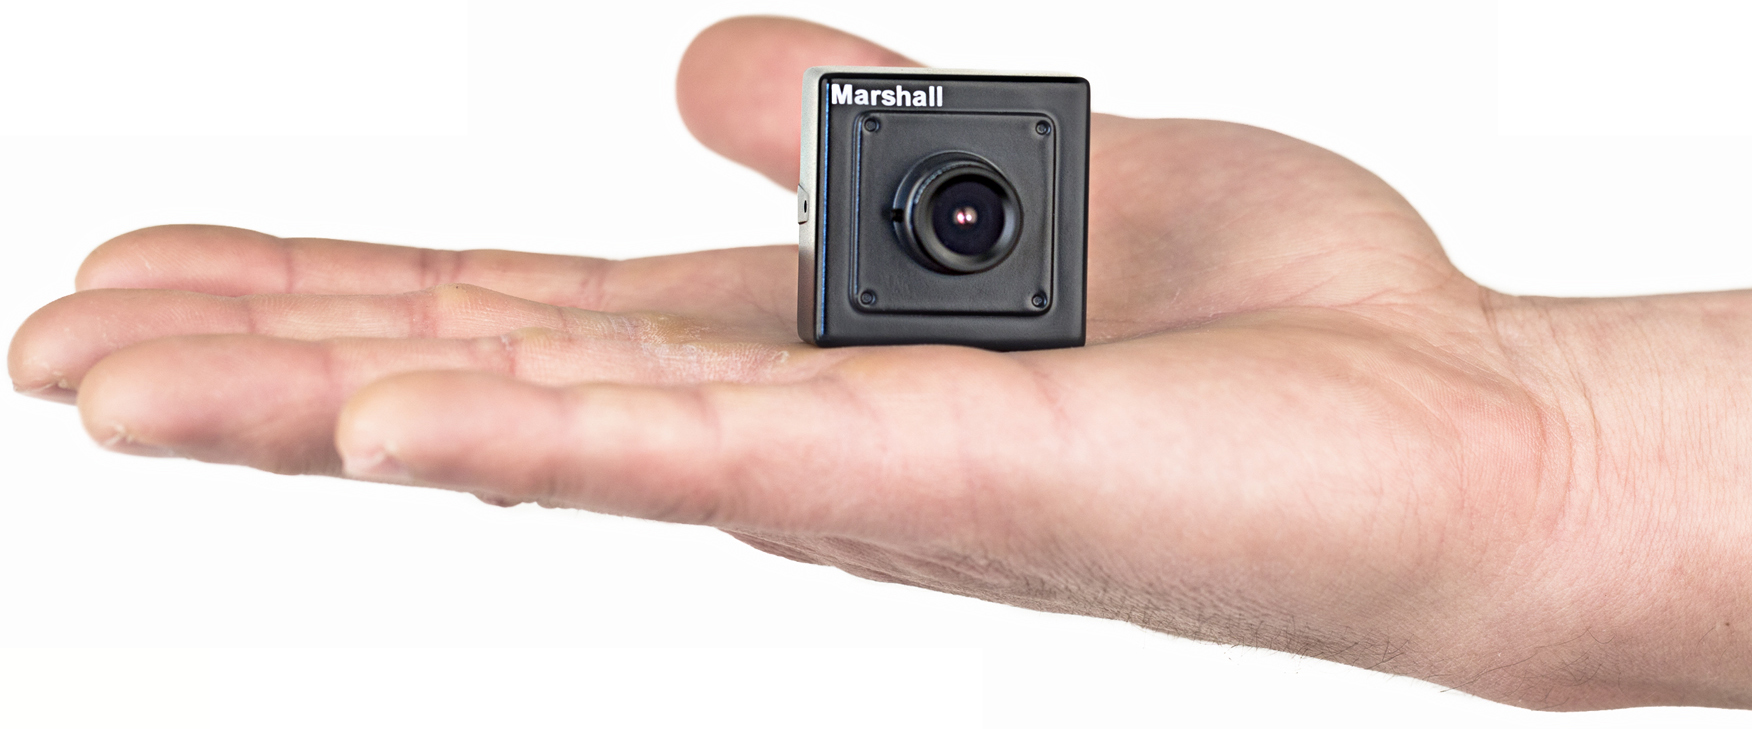 Marshall Develops Low Cost “Palm Size” Broadcast HDSDI Camera 12